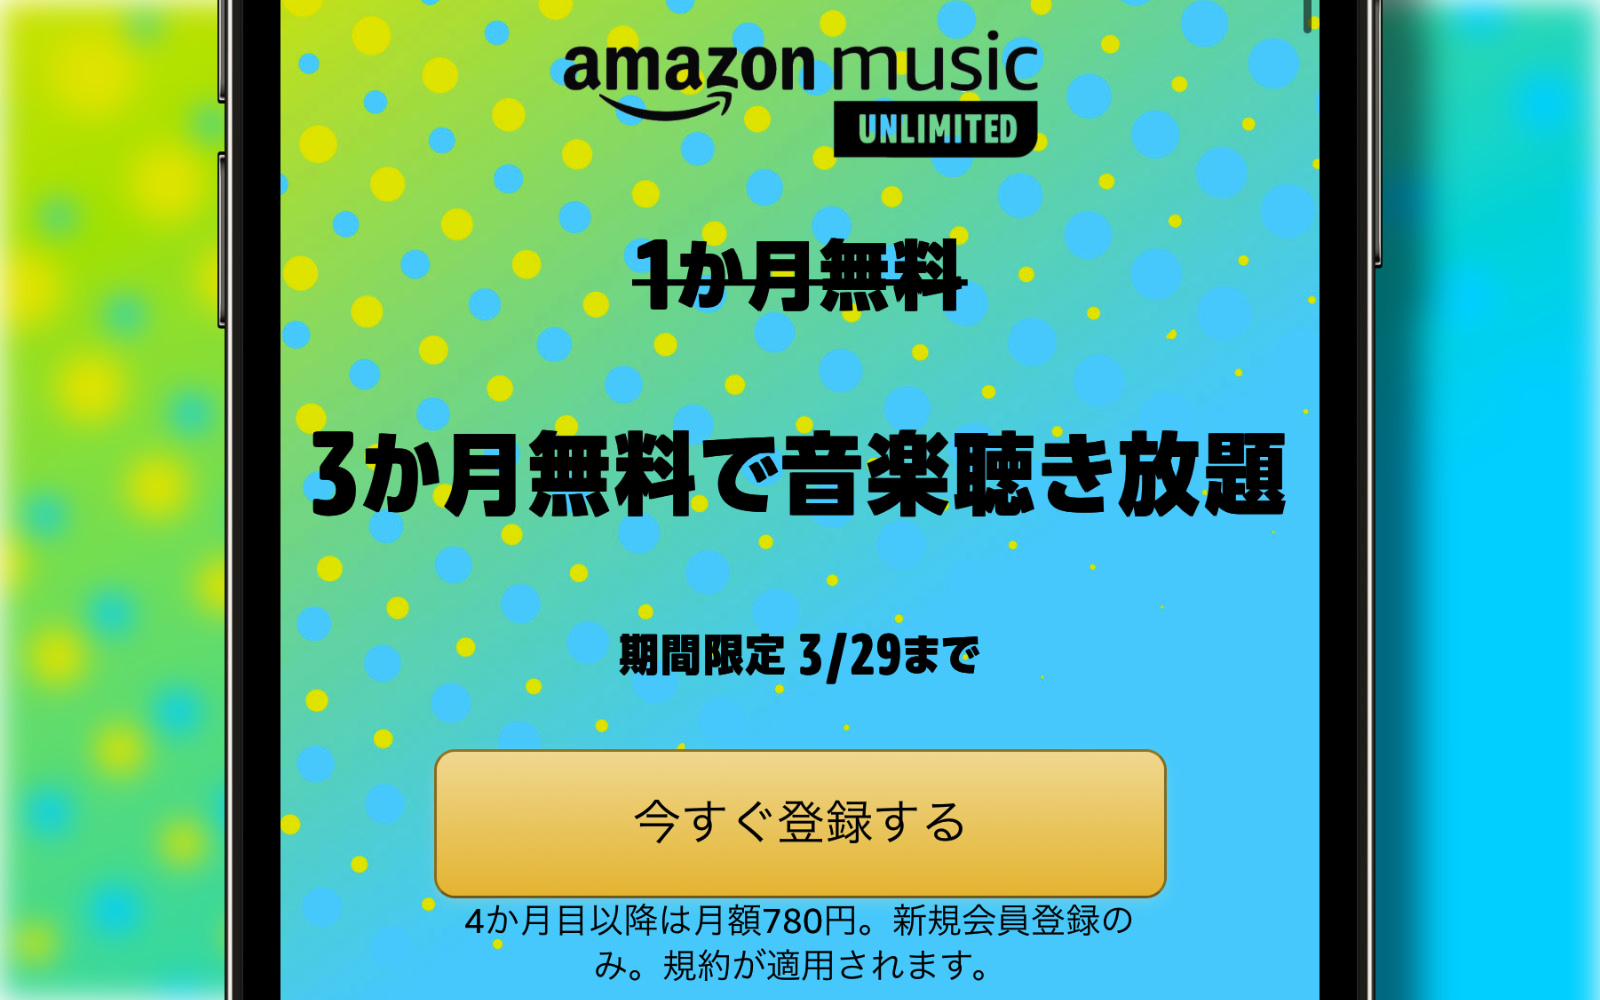 Amazon Music 3months free